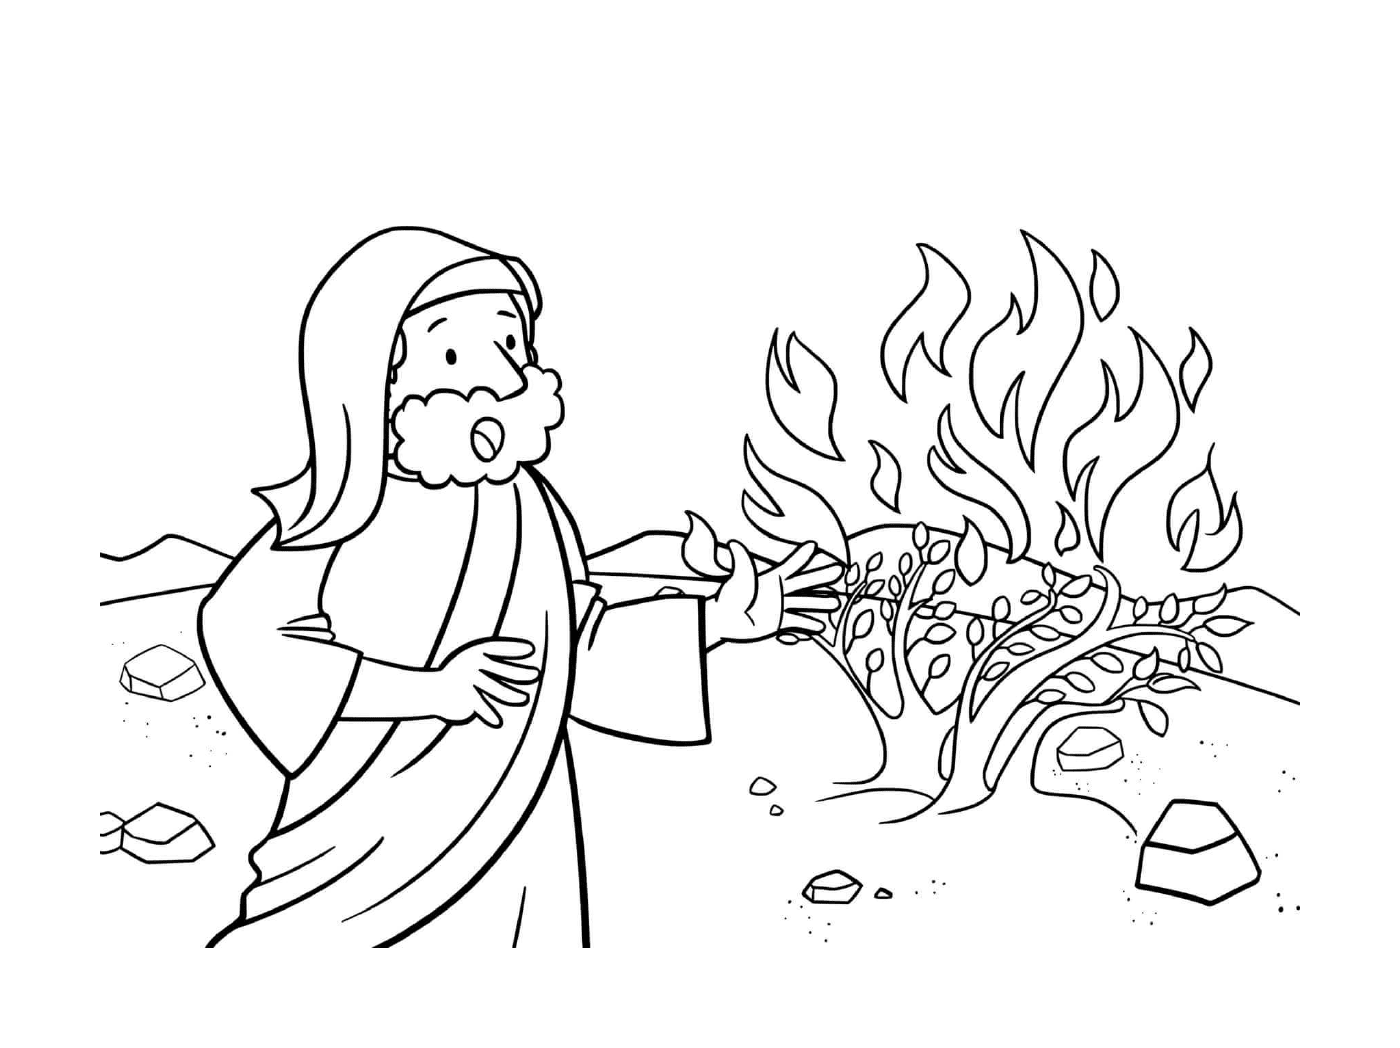  Man burning a tree 